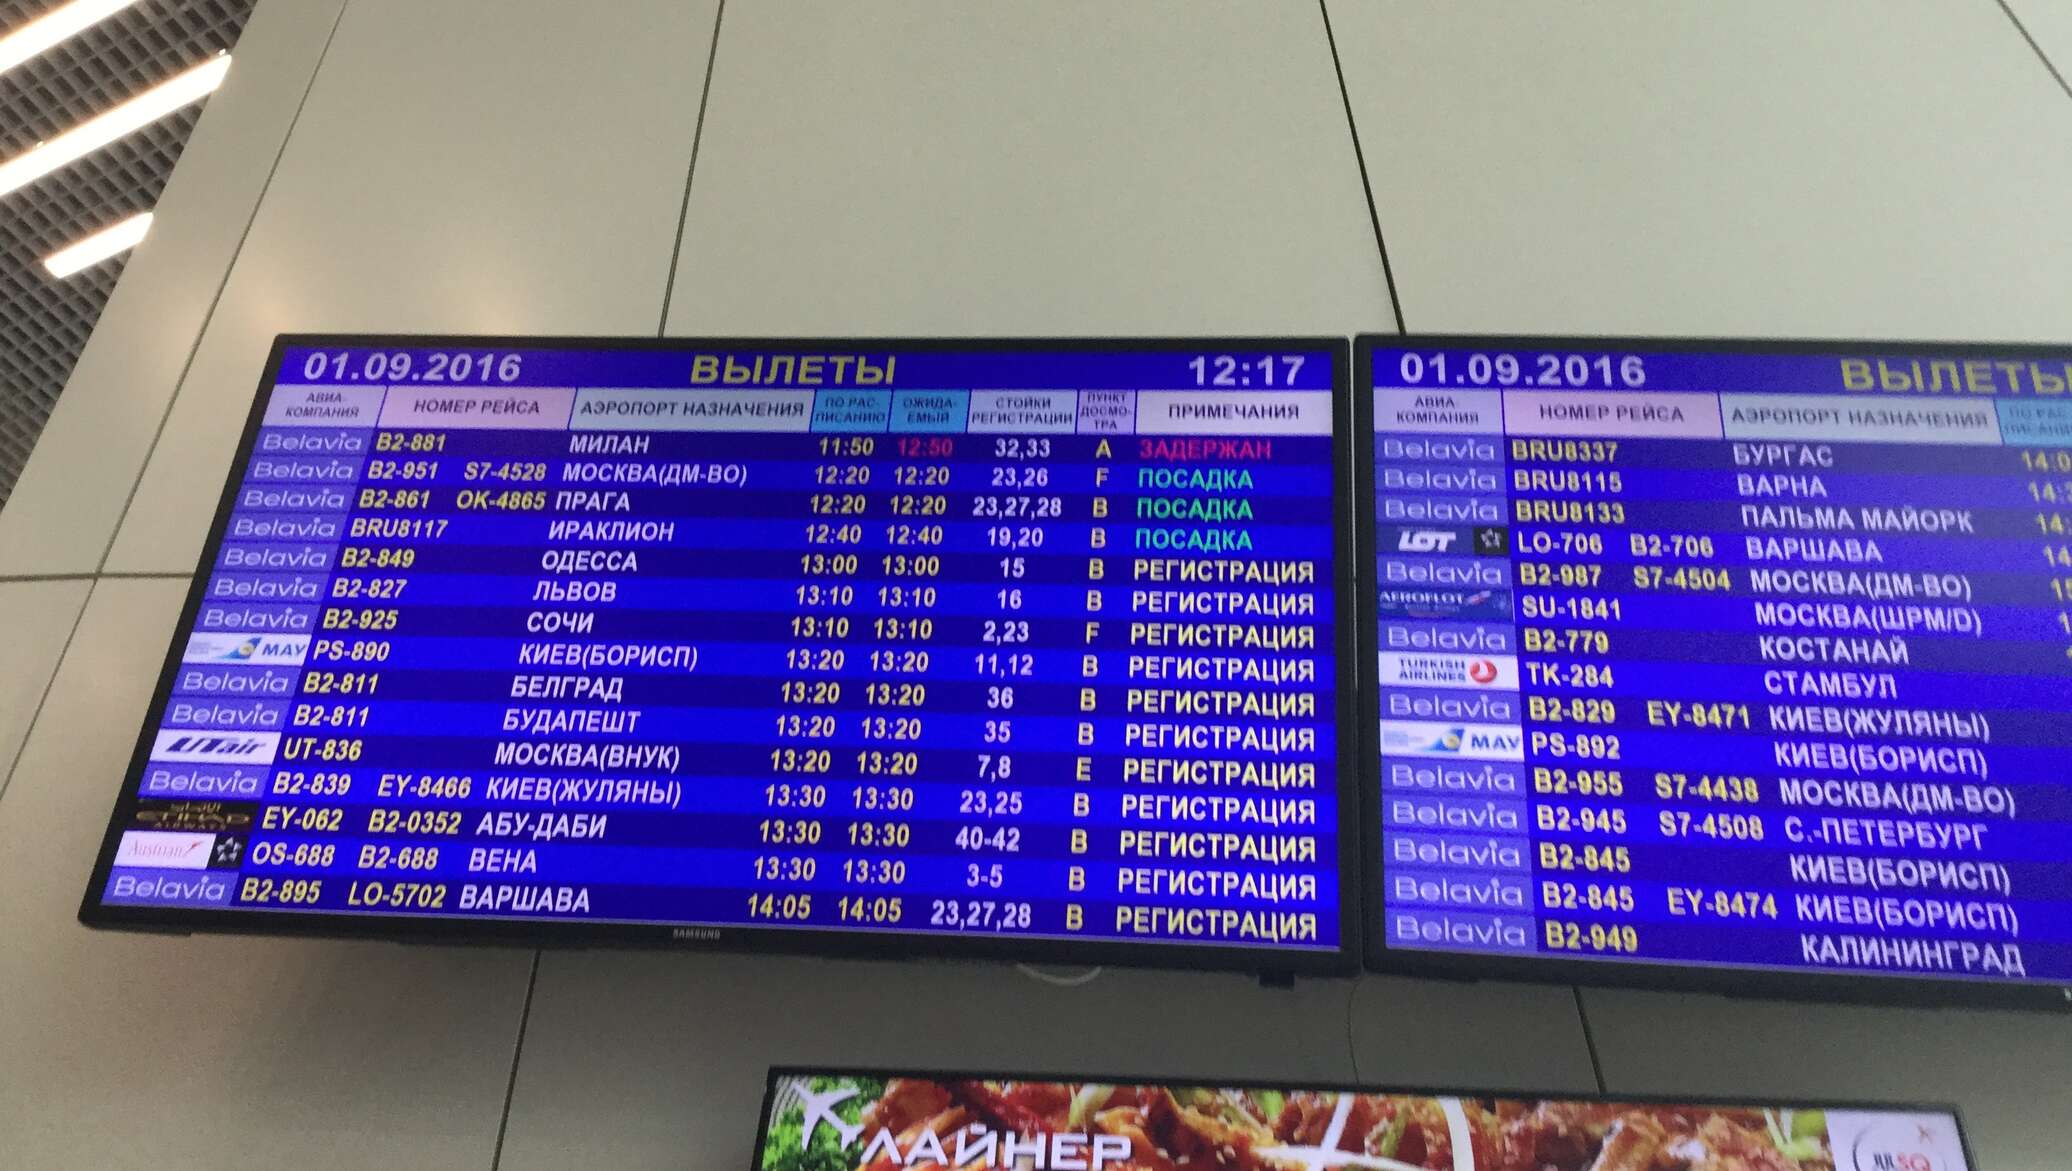 Стамбул аэропорт табло прилета на сегодня русском. Аэропорт табло вылета. Табло в Минском аэропорту. Табло Минского аэропорта вылет. Абу Даби аэропорт табло вылета.